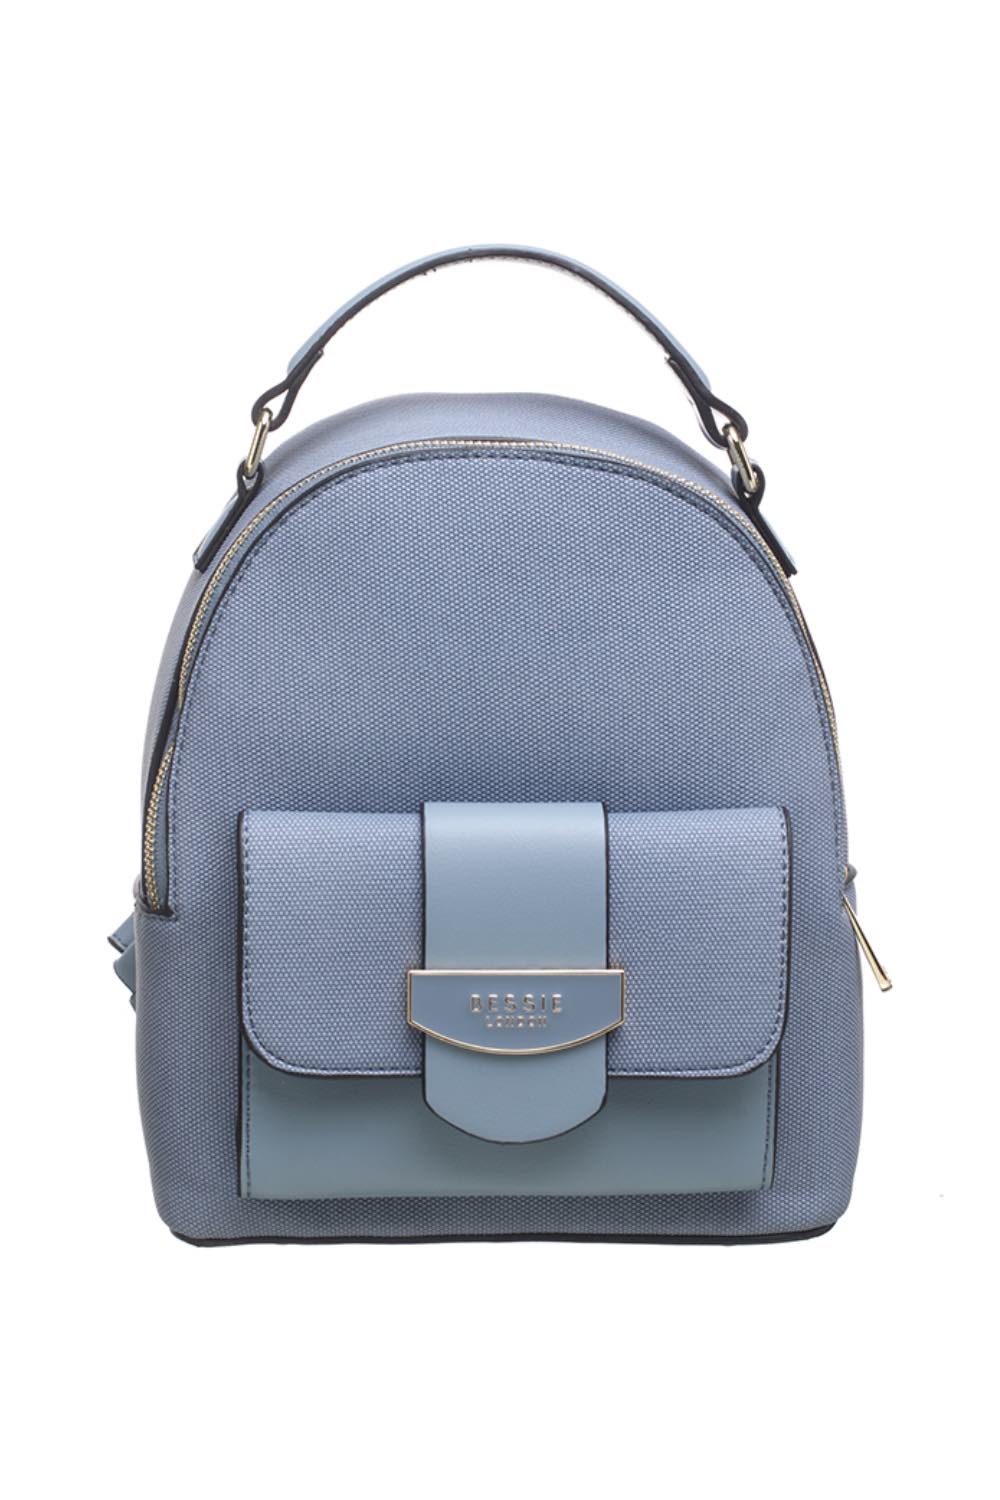 Bessie-blue-midi-ruck-sack-with-front-purse-pocket-djv-boutique